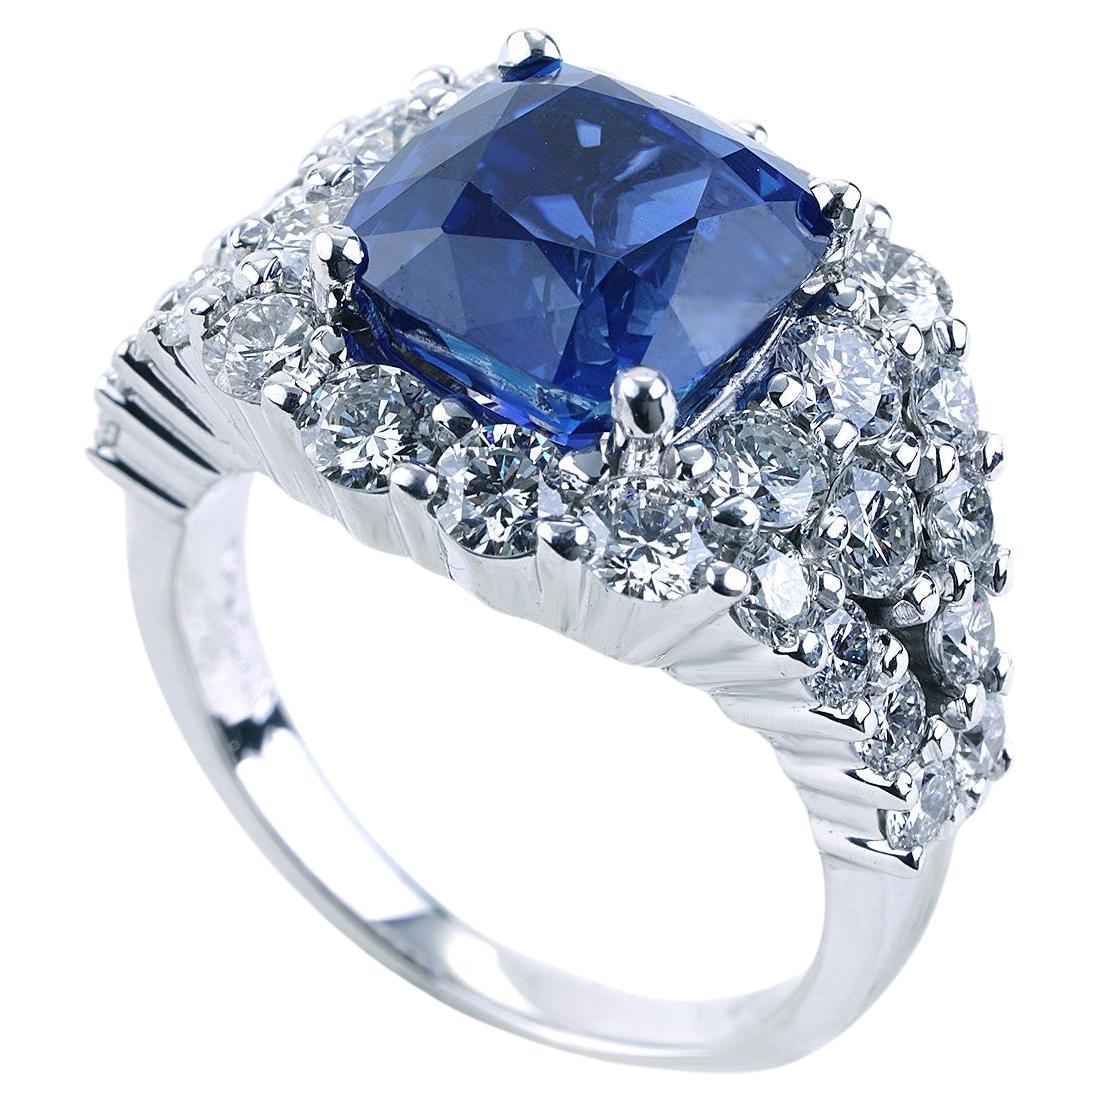 Bague en or 18 carats, saphir bleu de Ceylan non chauffé et diamants certifiés GIA de 5,42 carats